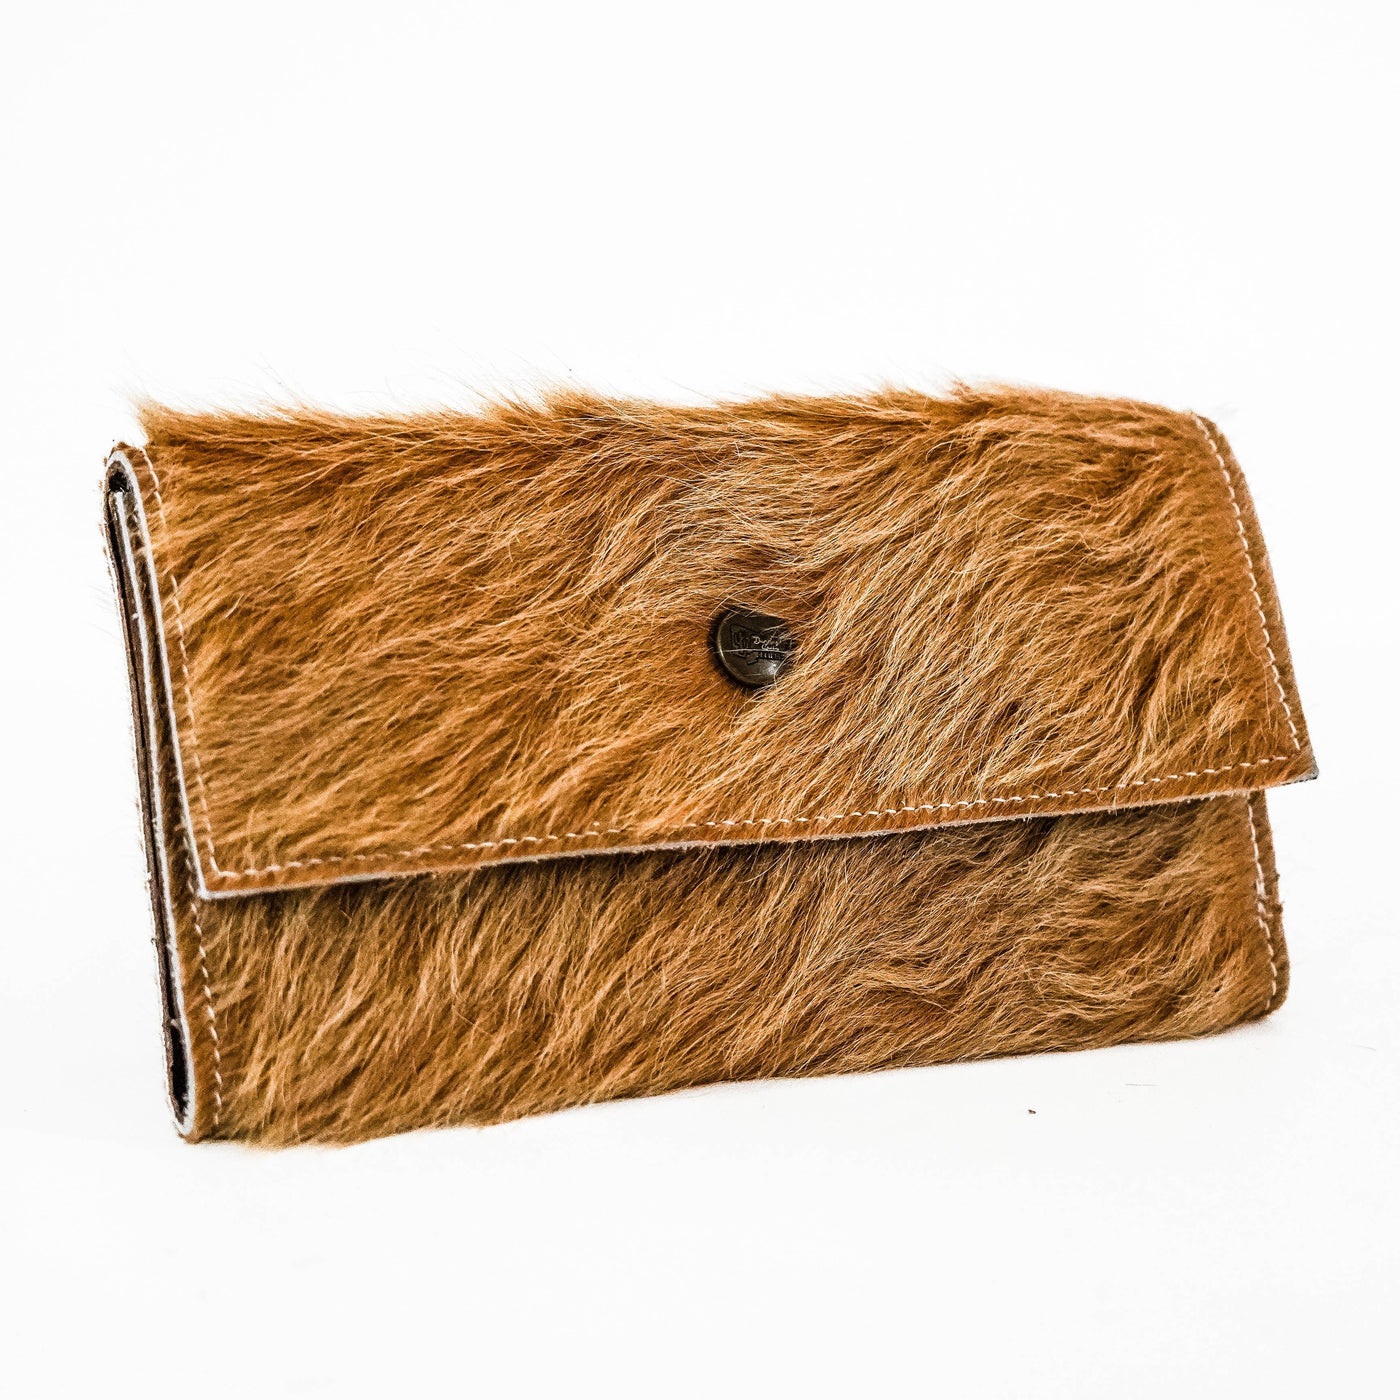 Kacey Wallet - Highlander-Kacey Wallet-Western-Cowhide-Bags-Handmade-Products-Gifts-Dancing Cactus Designs